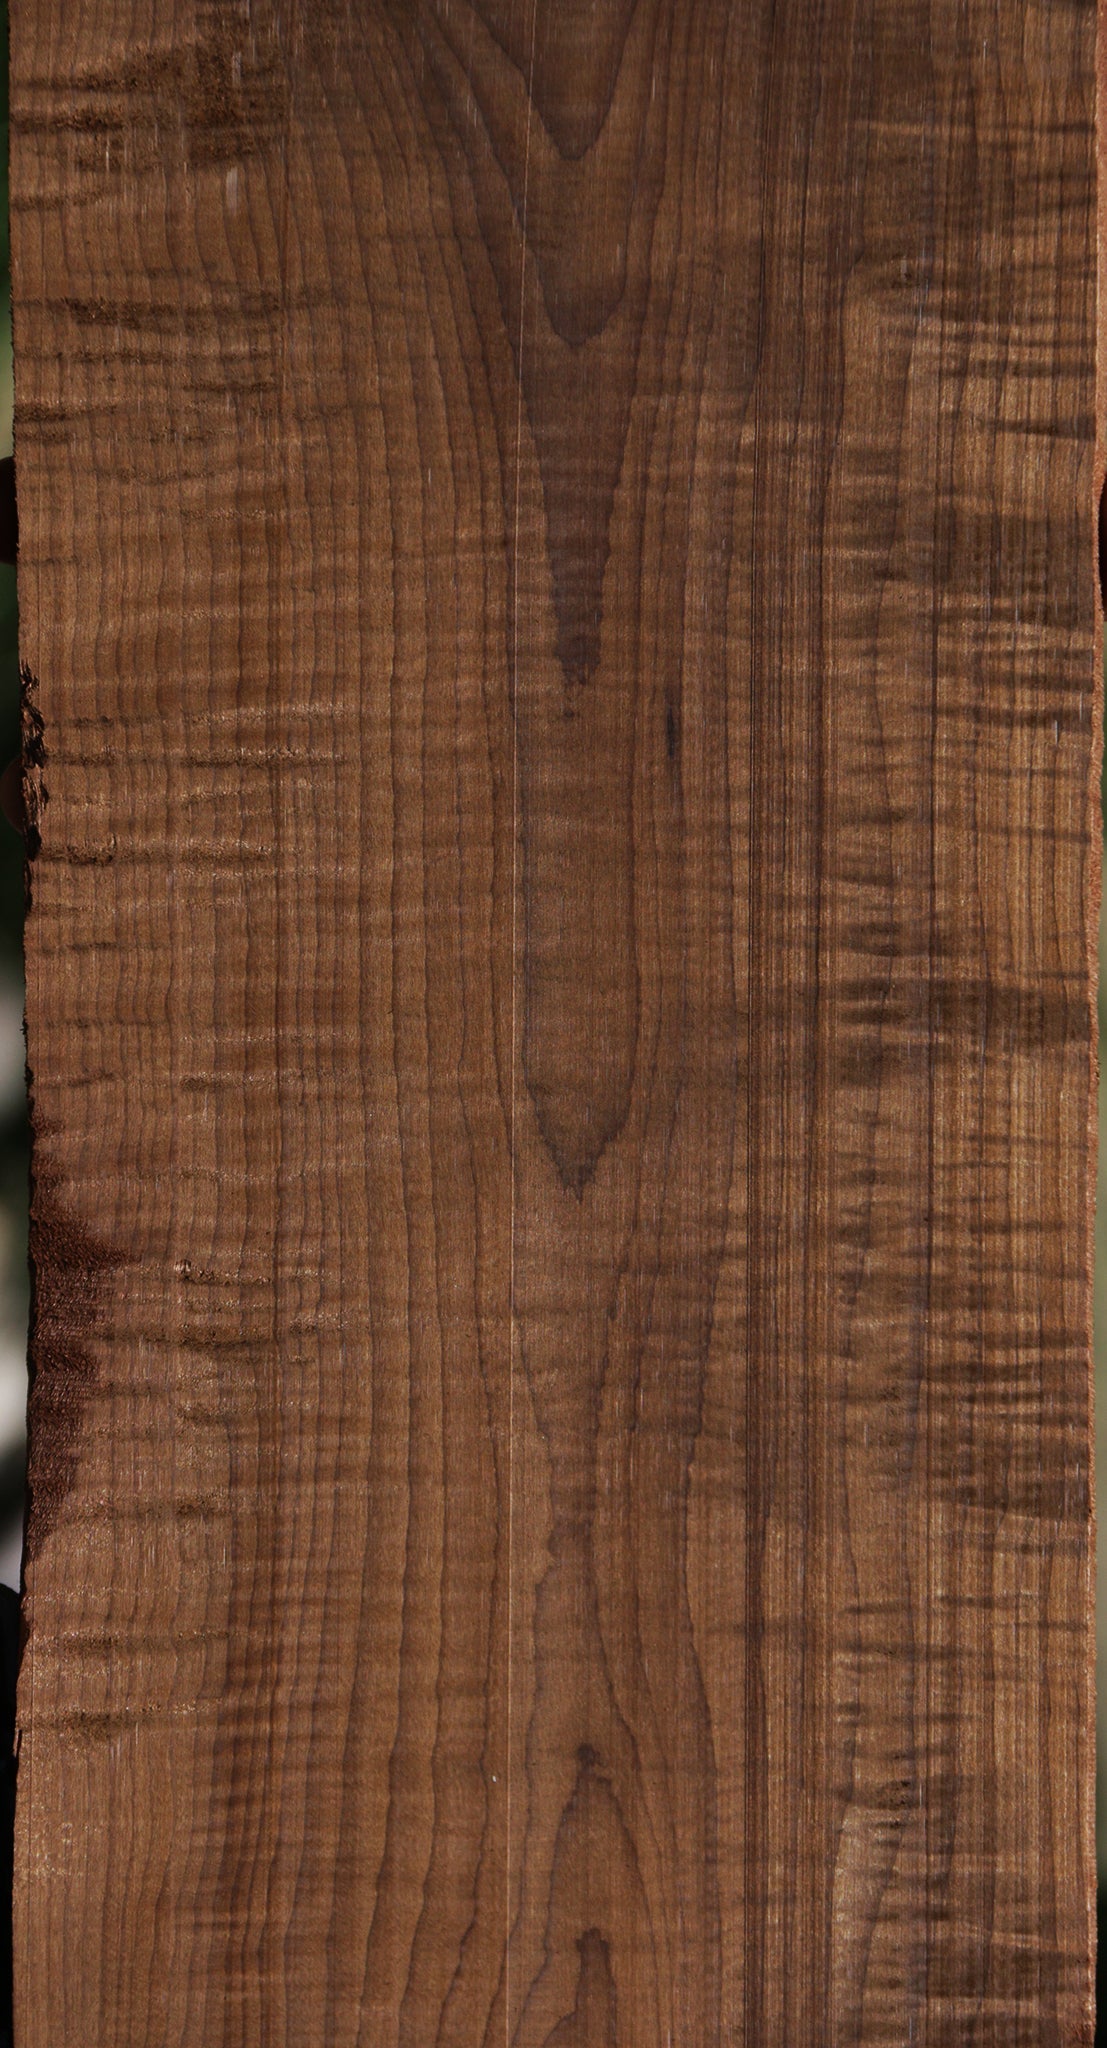 Exhibition Curly Caramelized Maple Lumber